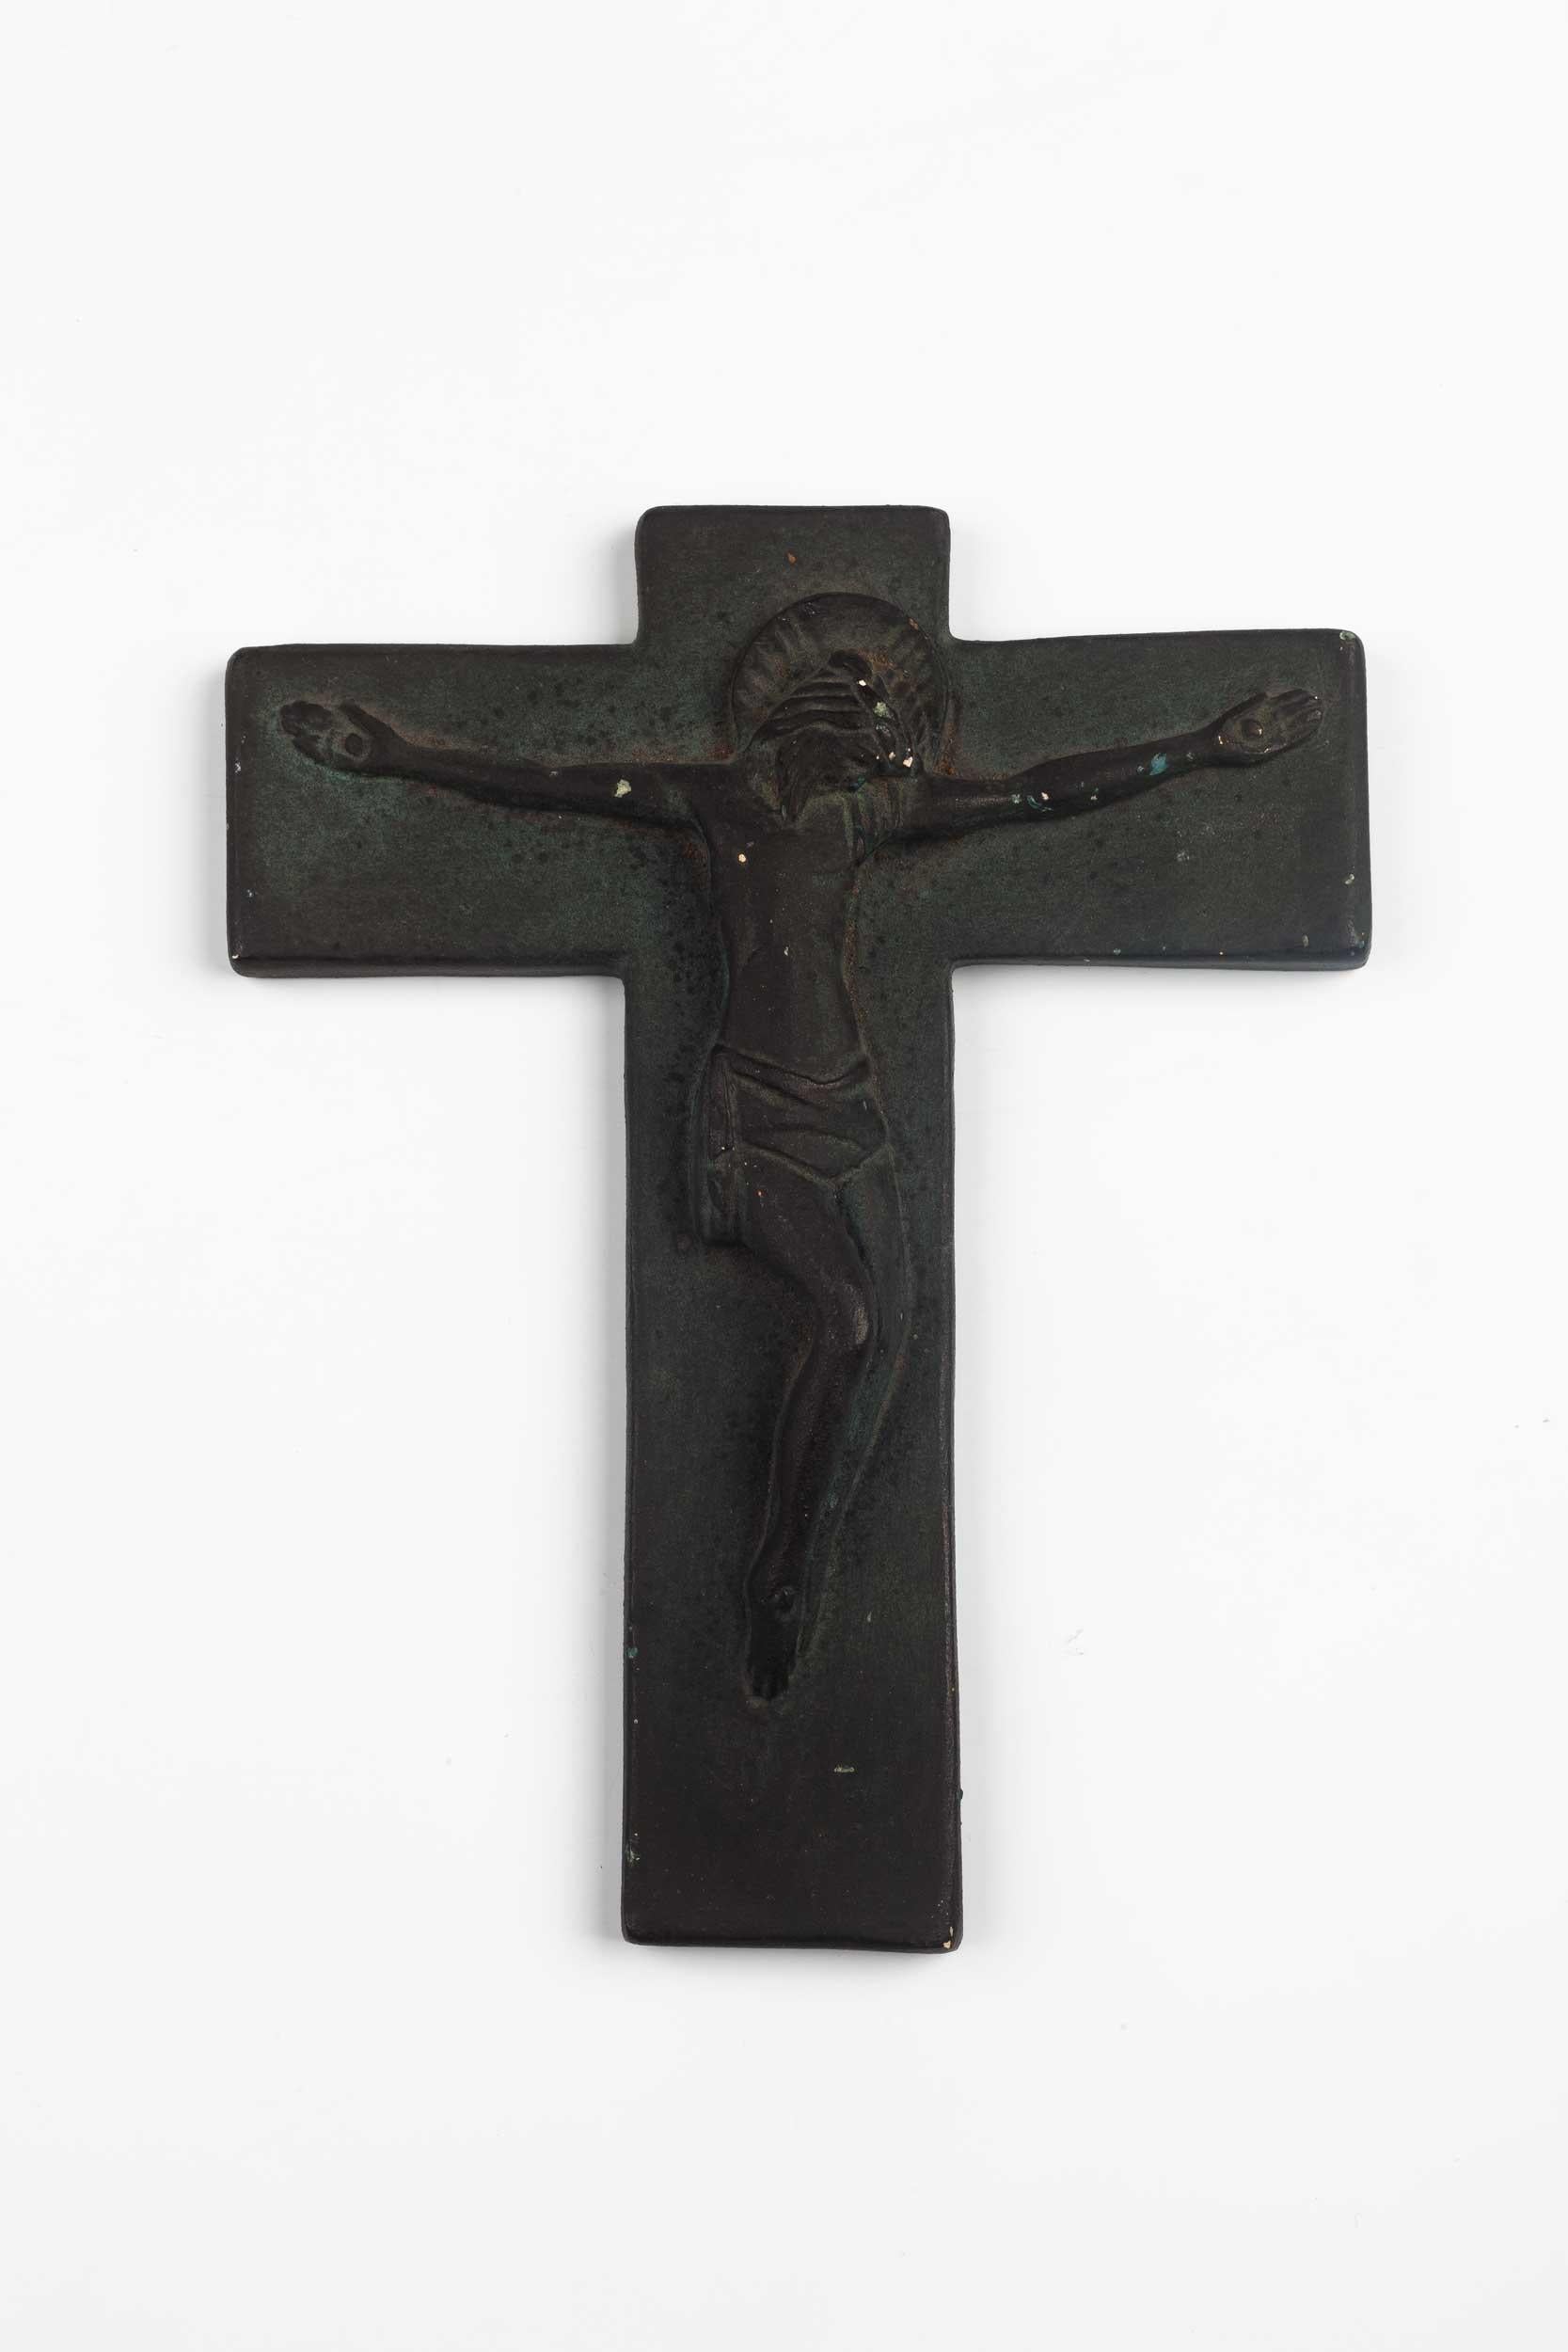 Mid-Century Modern European Ceramic Crucifix in Matte Charcoal, 1960s